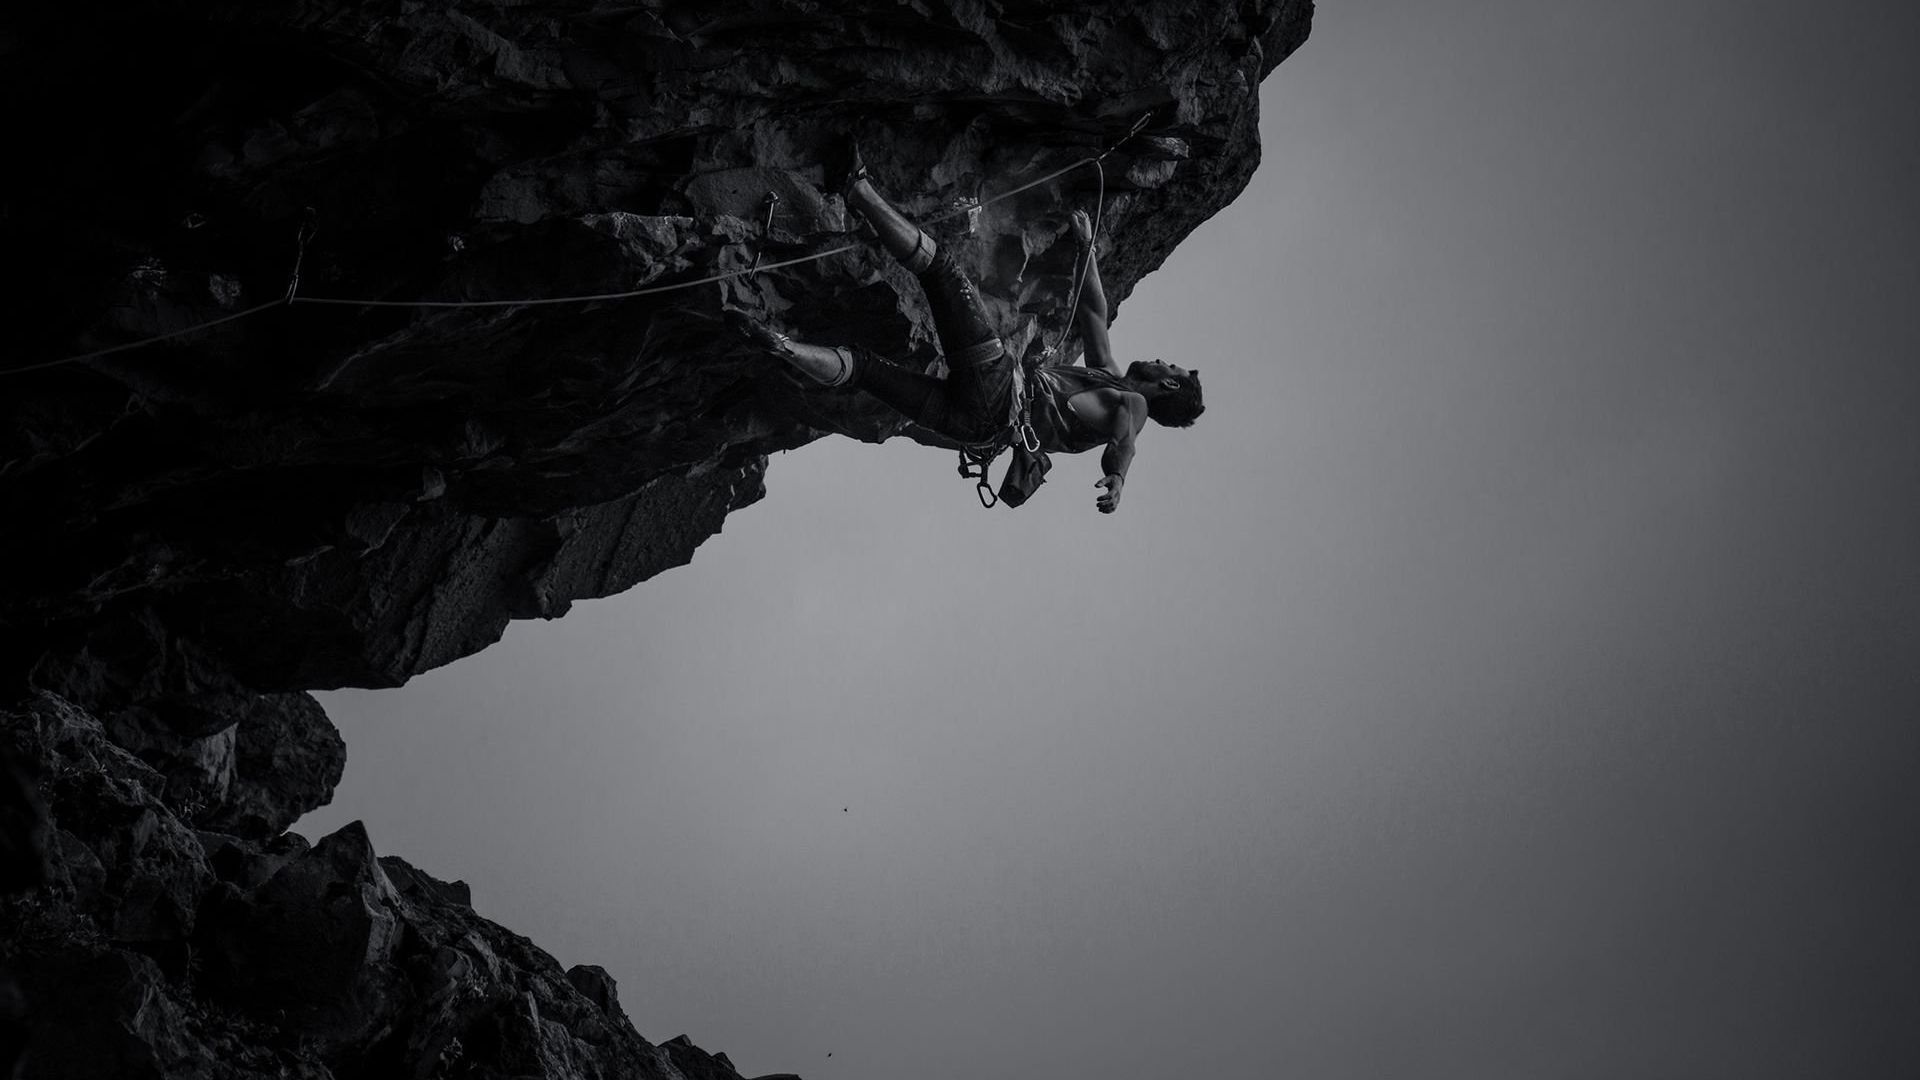 Wallpaper Monochrome rock climbing of man